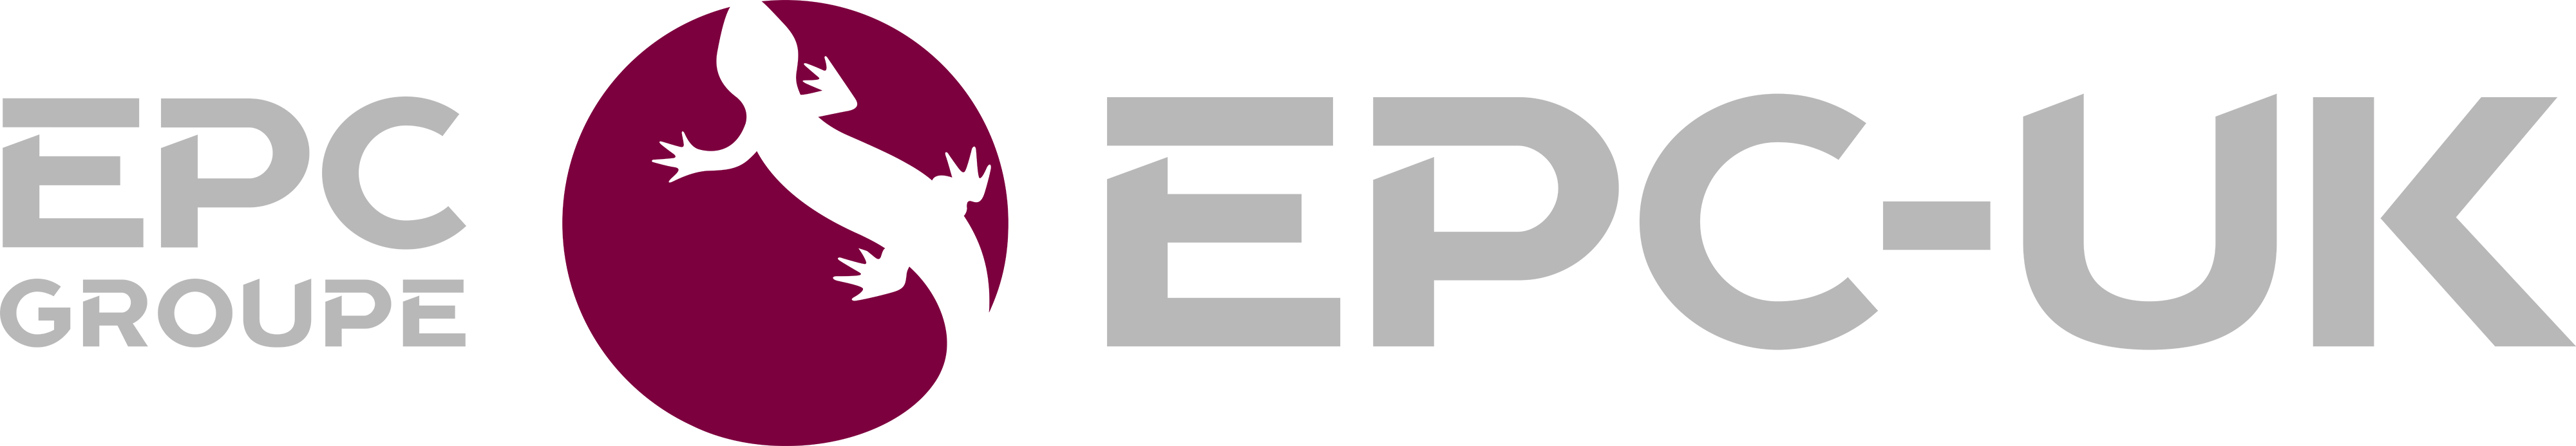 EPC-UK_logo_colour